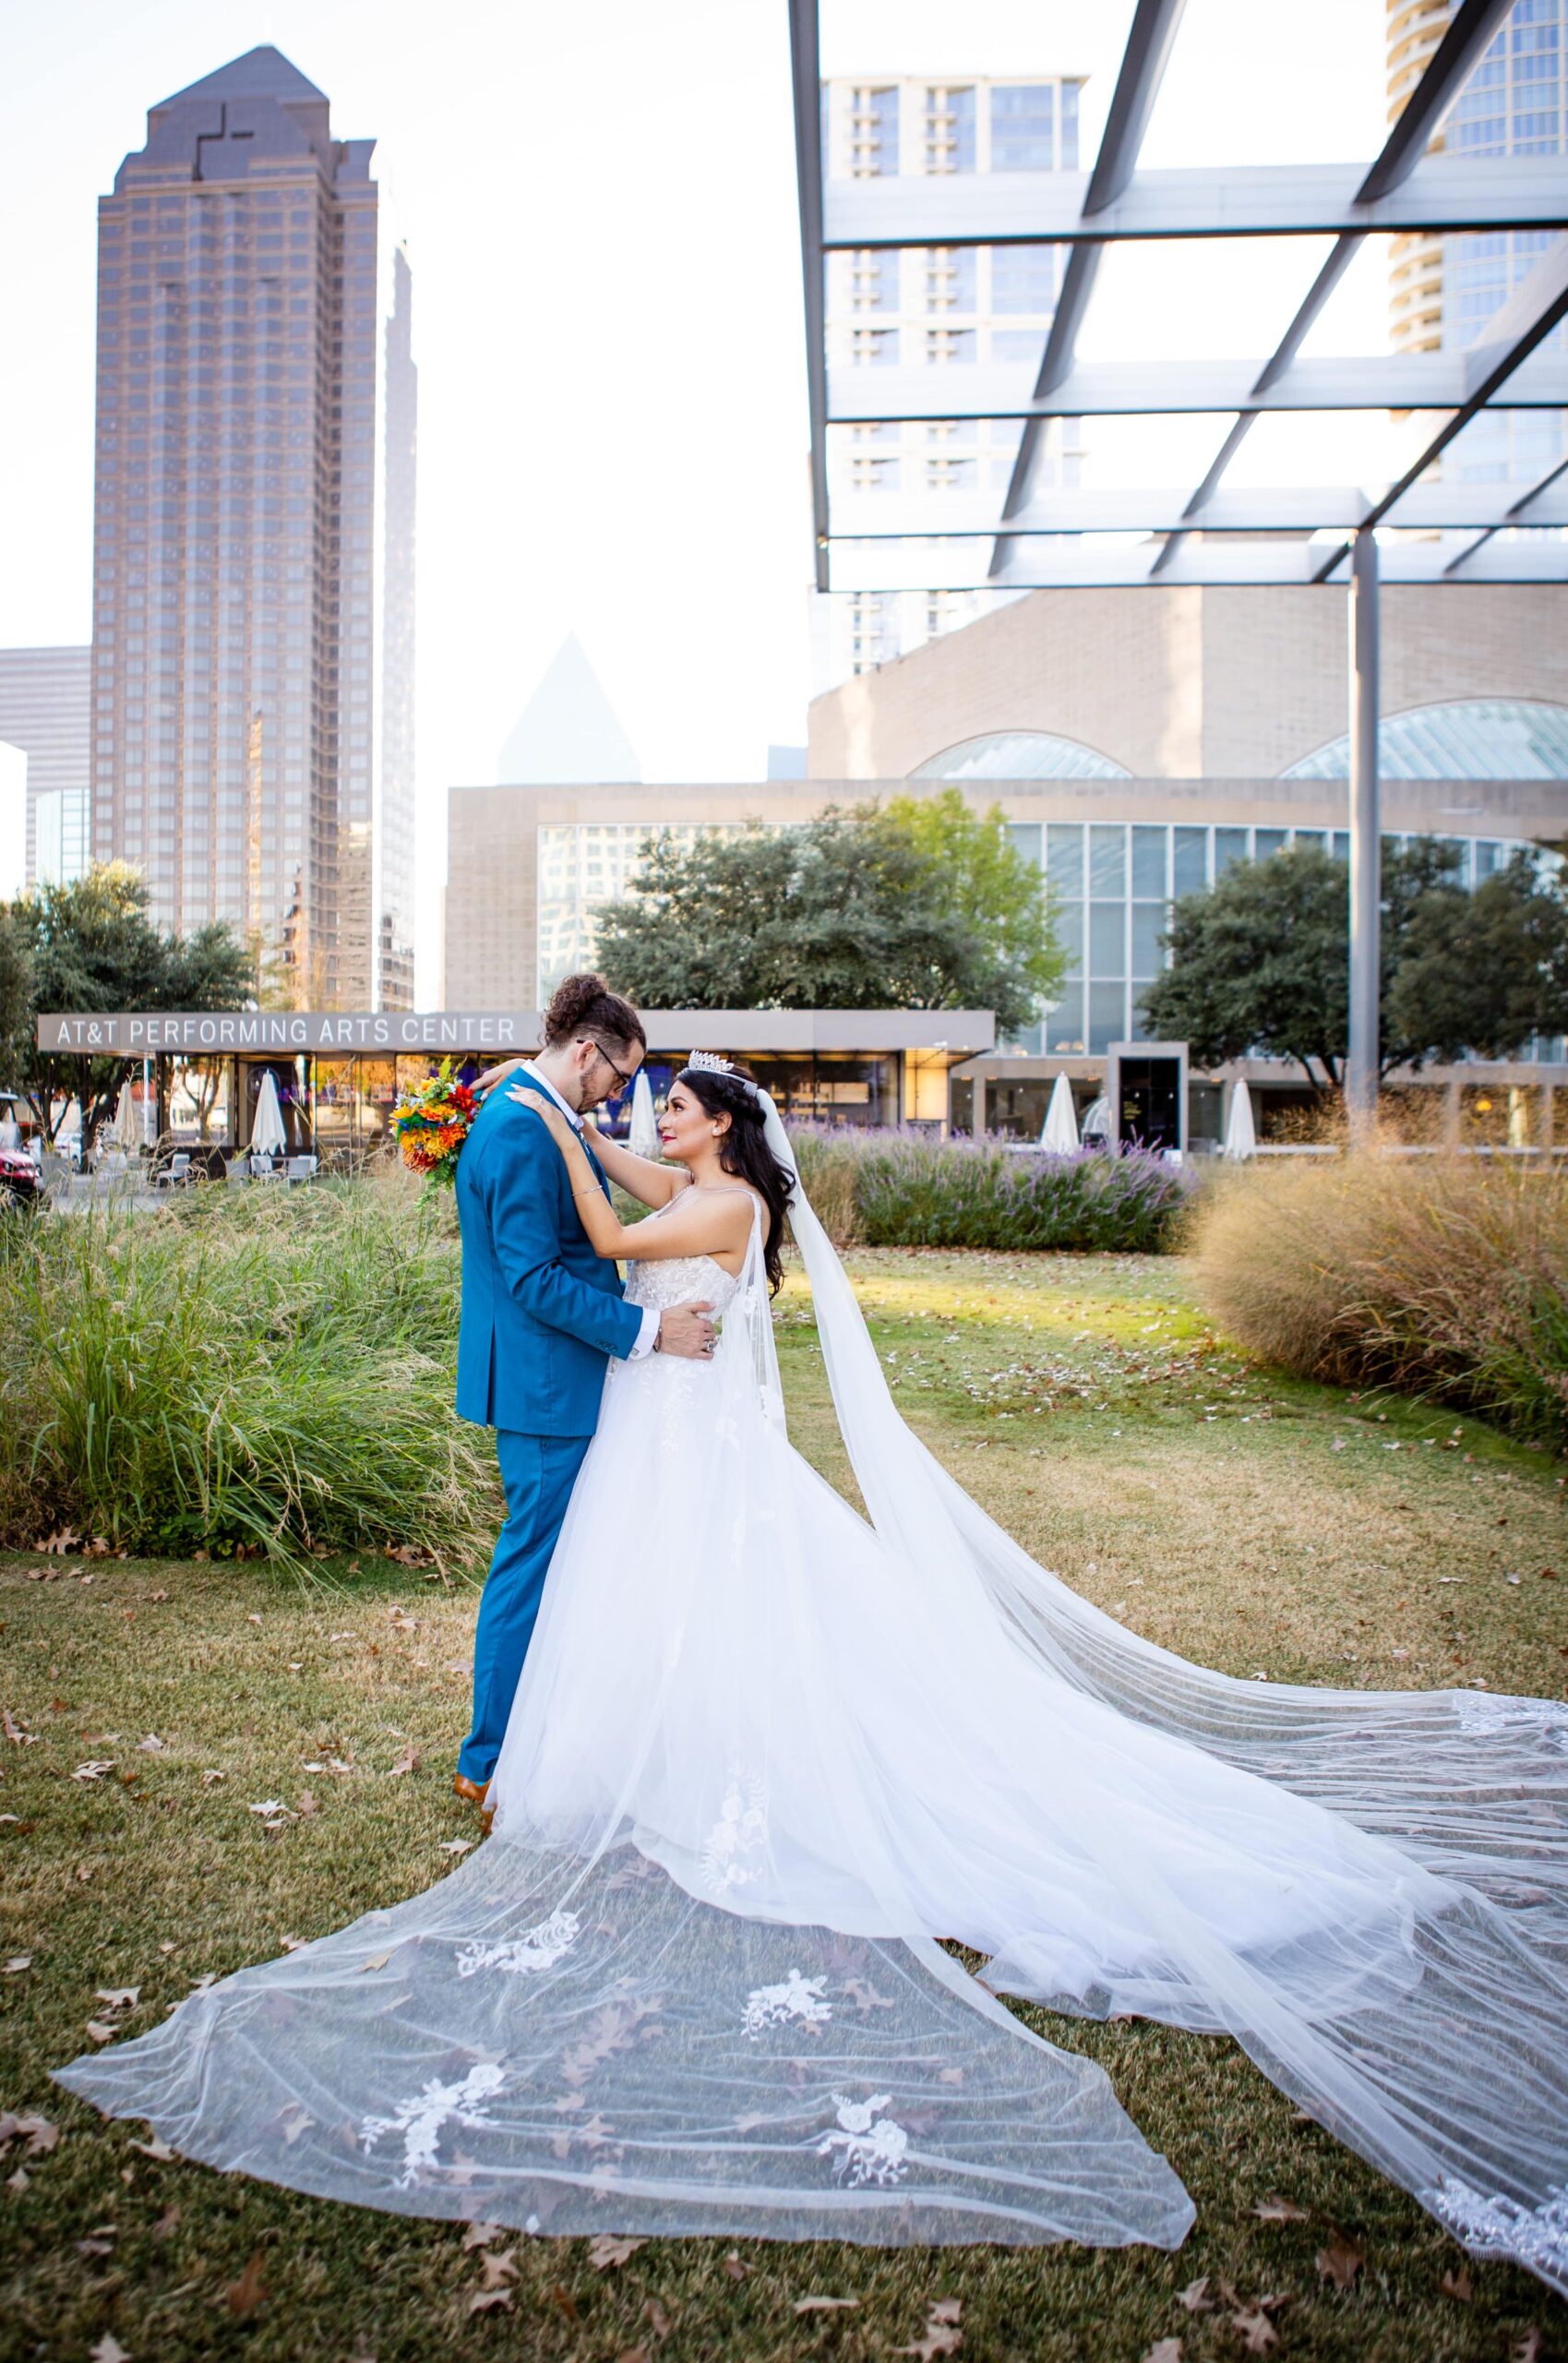 Dallas arts district wedding photographer wedding couple